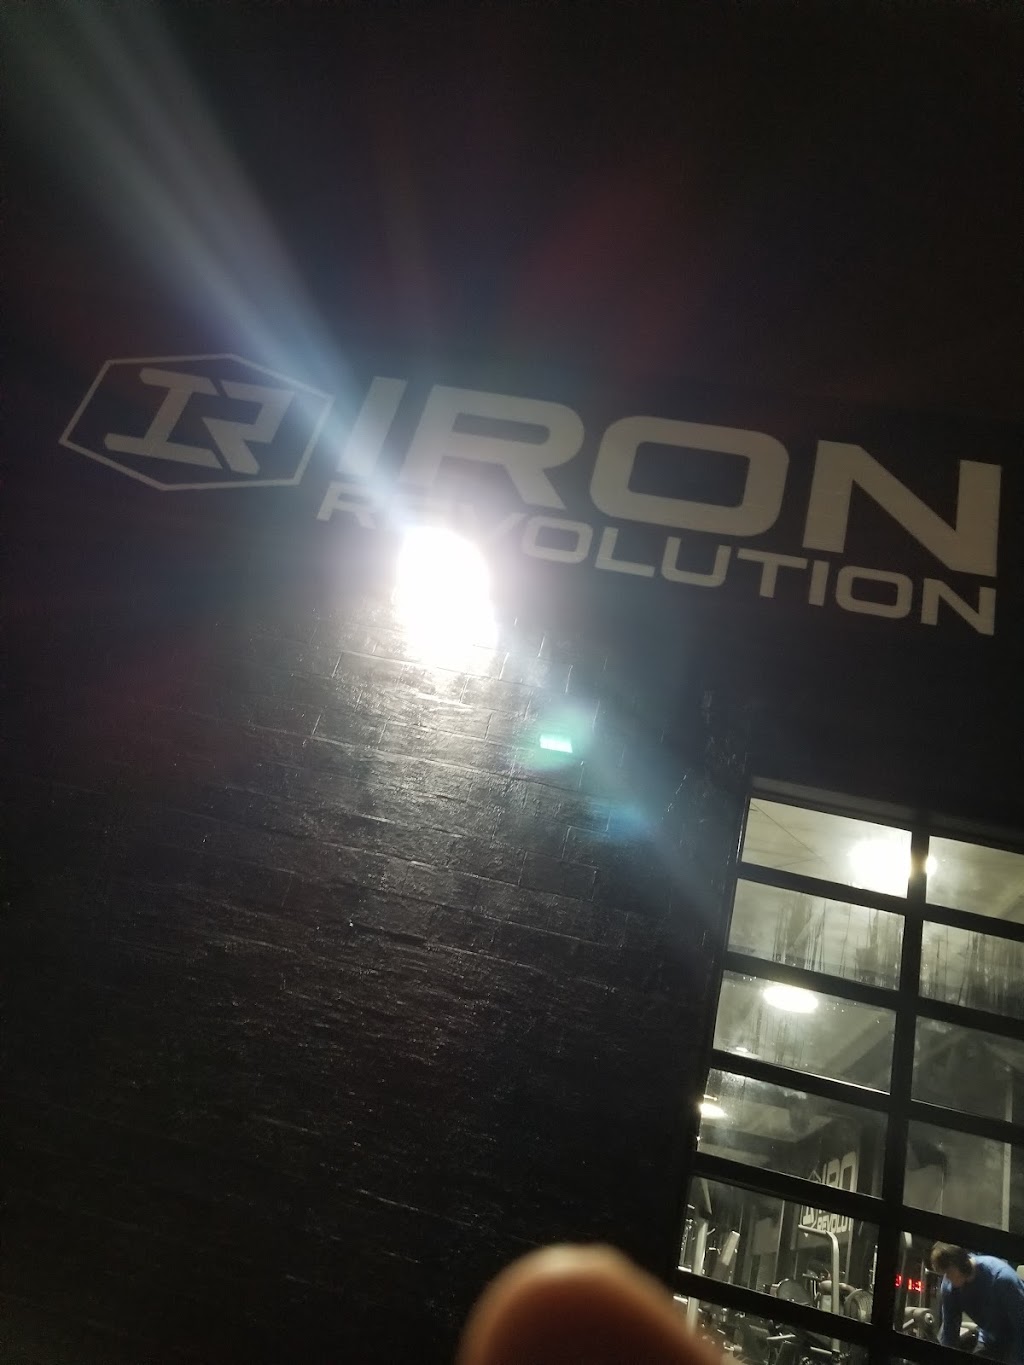 Iron Revolution | 2234 US-9, Howell Township, NJ 07731 | Phone: (732) 413-4080